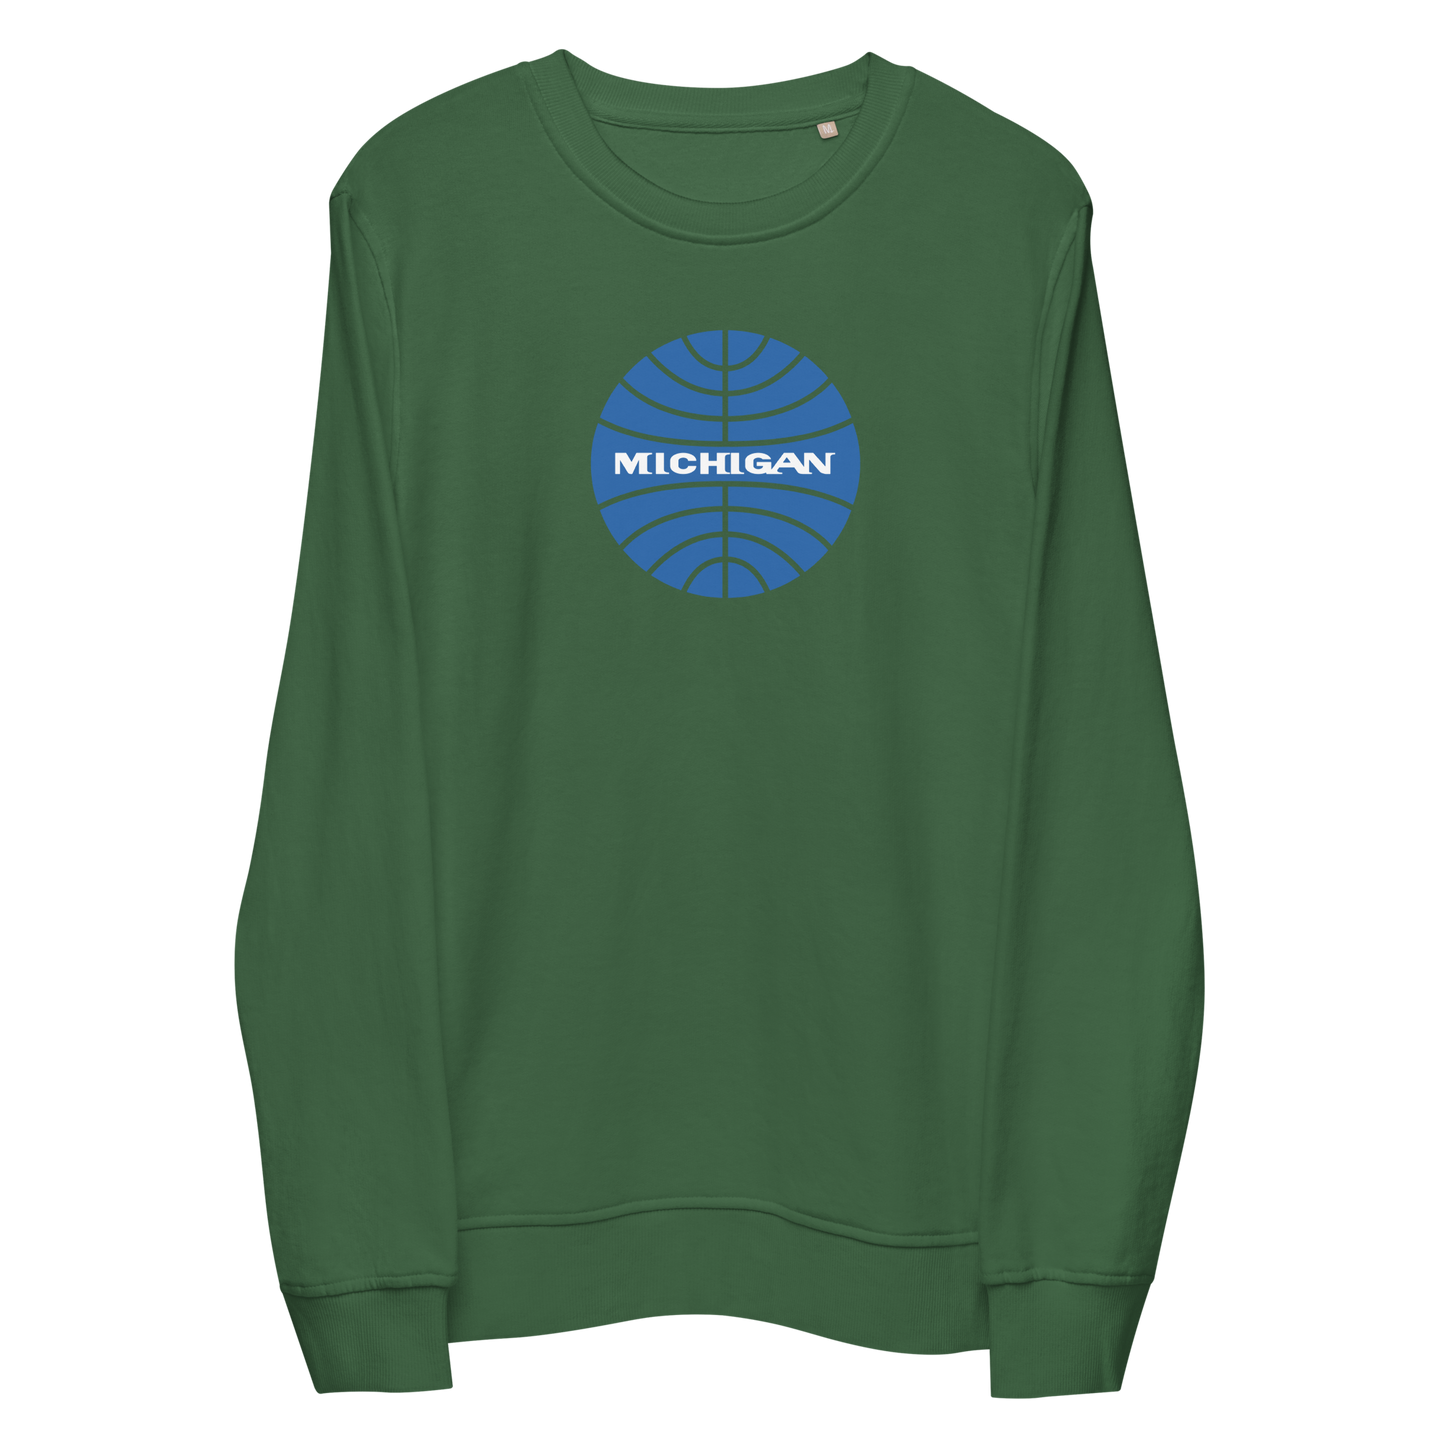 'Michigan' Organic Sweatshirt (Vintage Airline Parody)